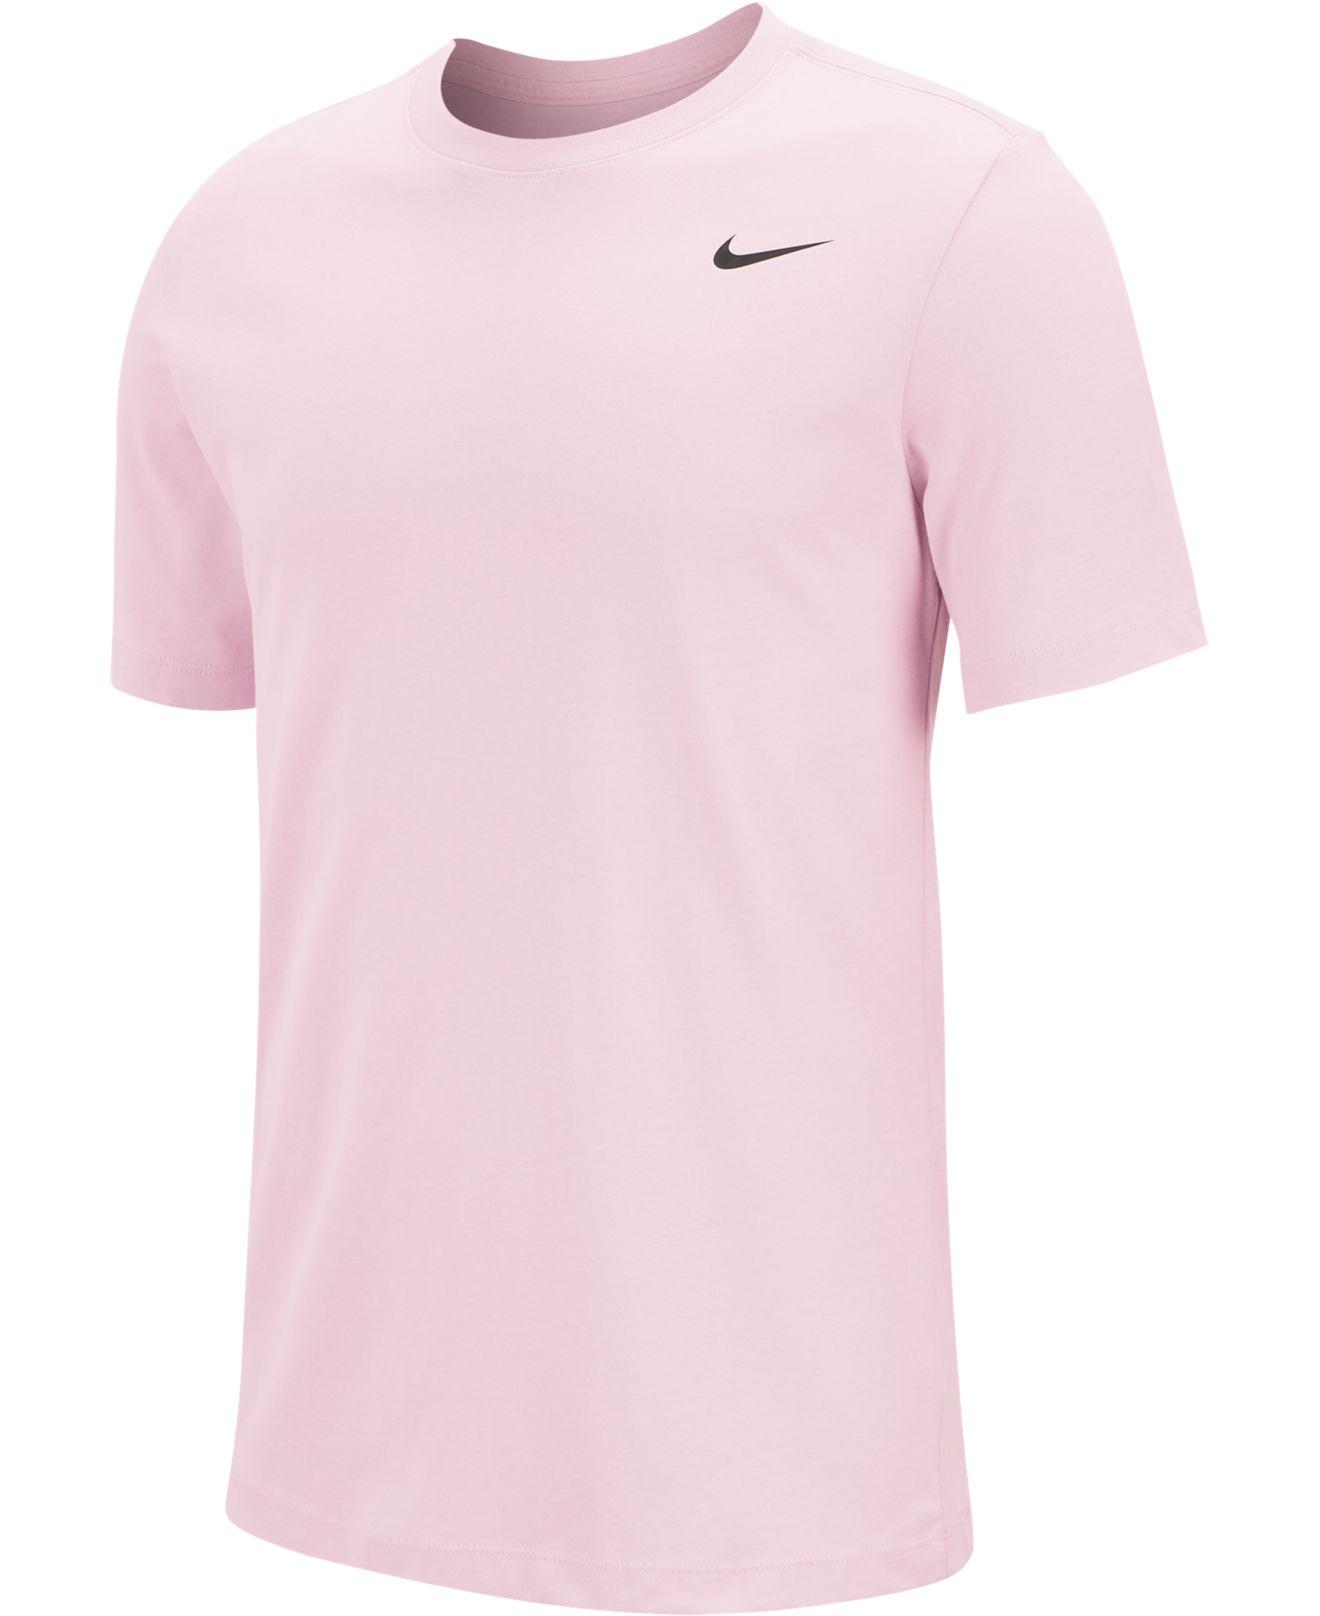 Nike Dry Tee Dri-fittm Solid (pink Foam/pale Pink/black) T Shirt Men | Lyst